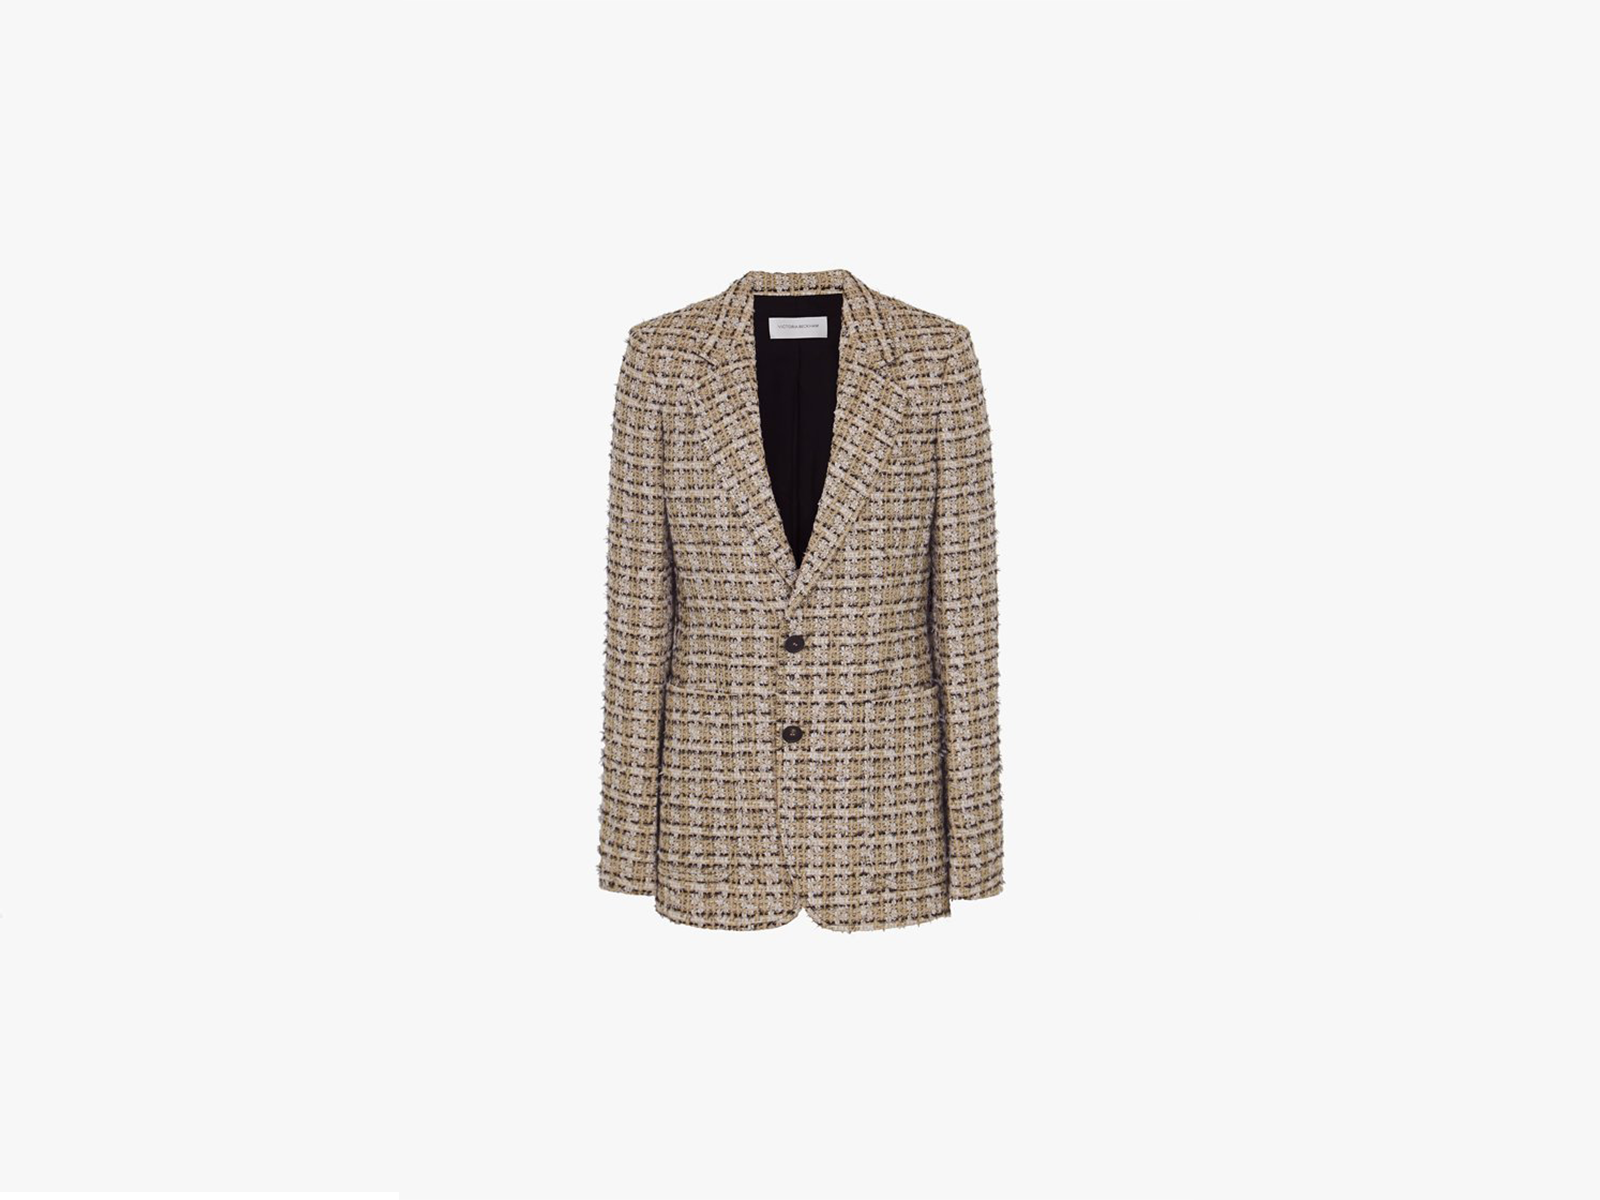 Victoria Beckham Faye Tailored Jacket in Tweed